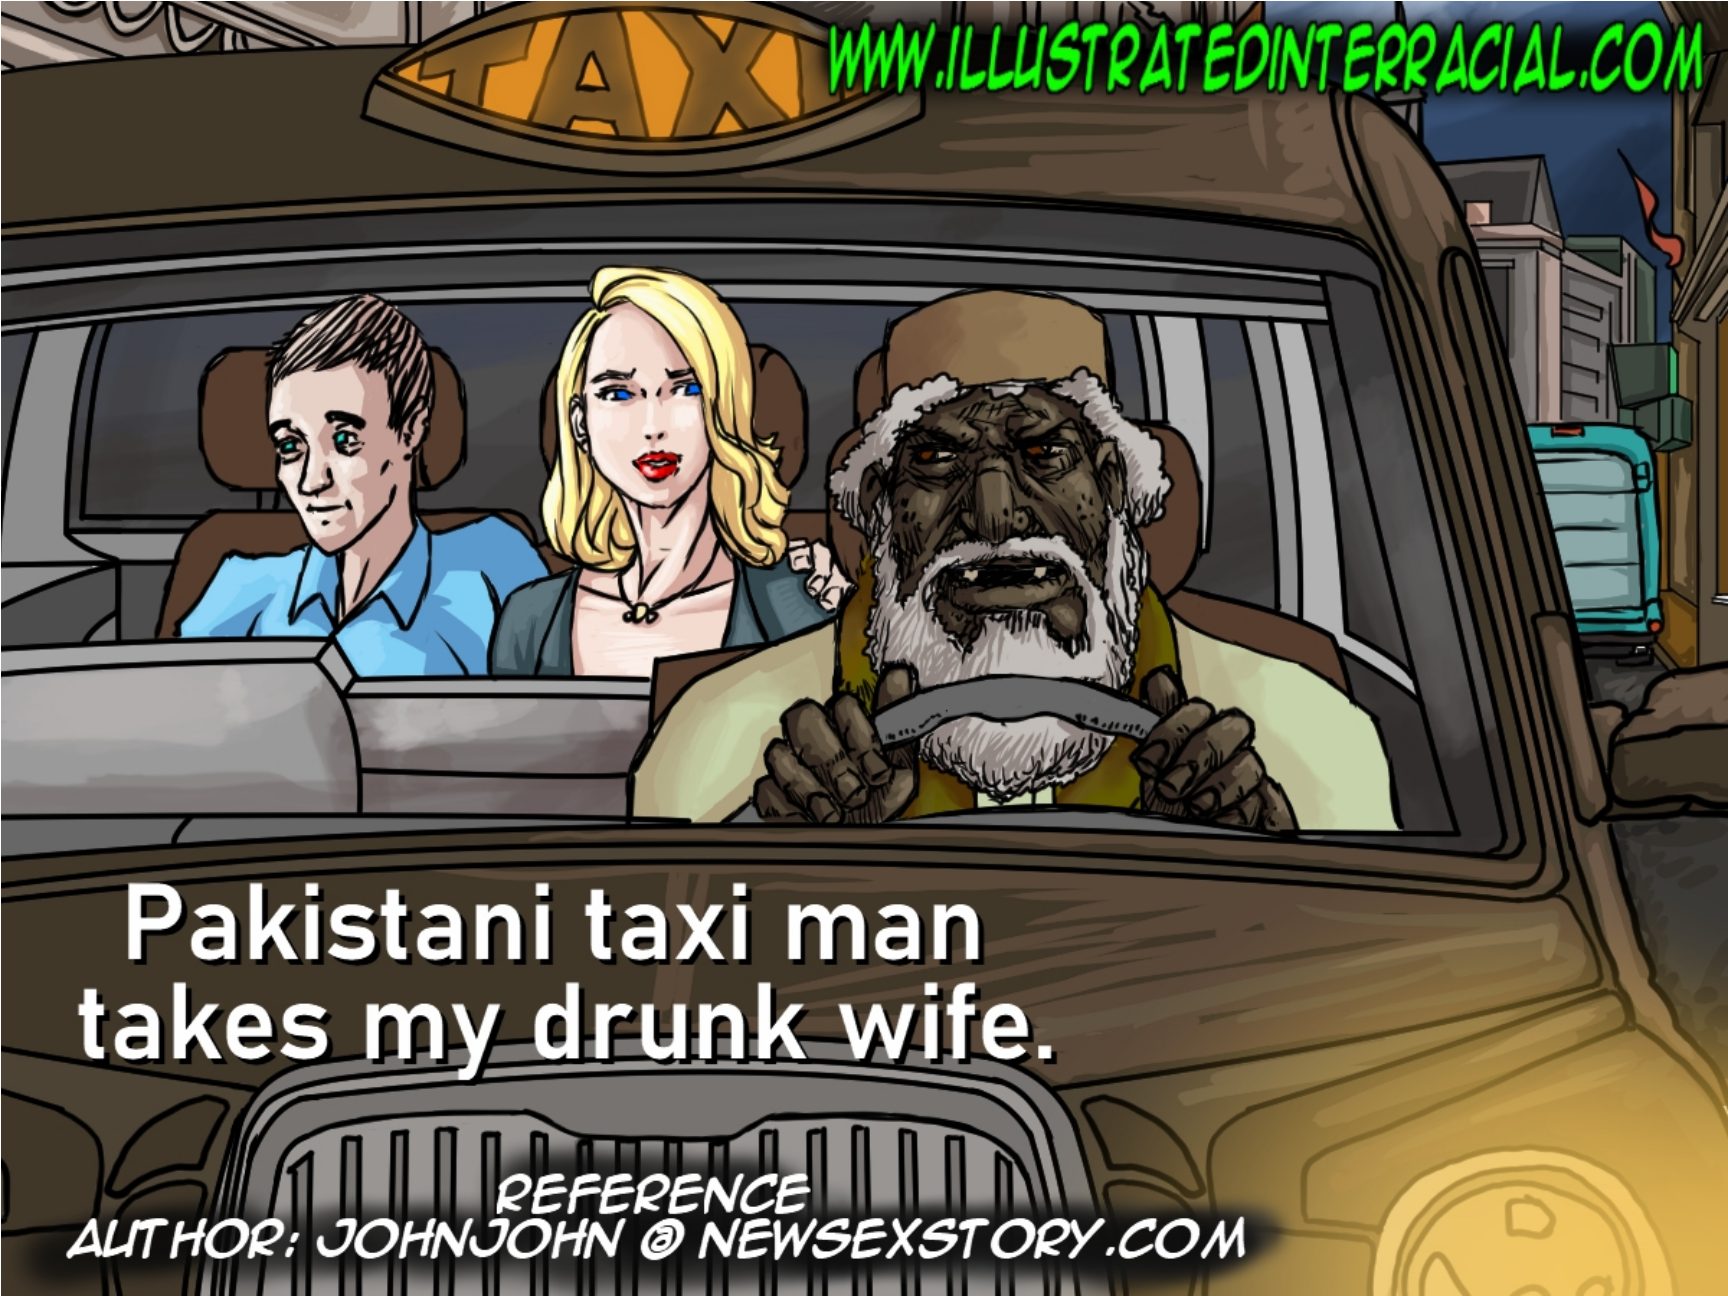 Pakastani Taxi Man - illustratedinterracial picture